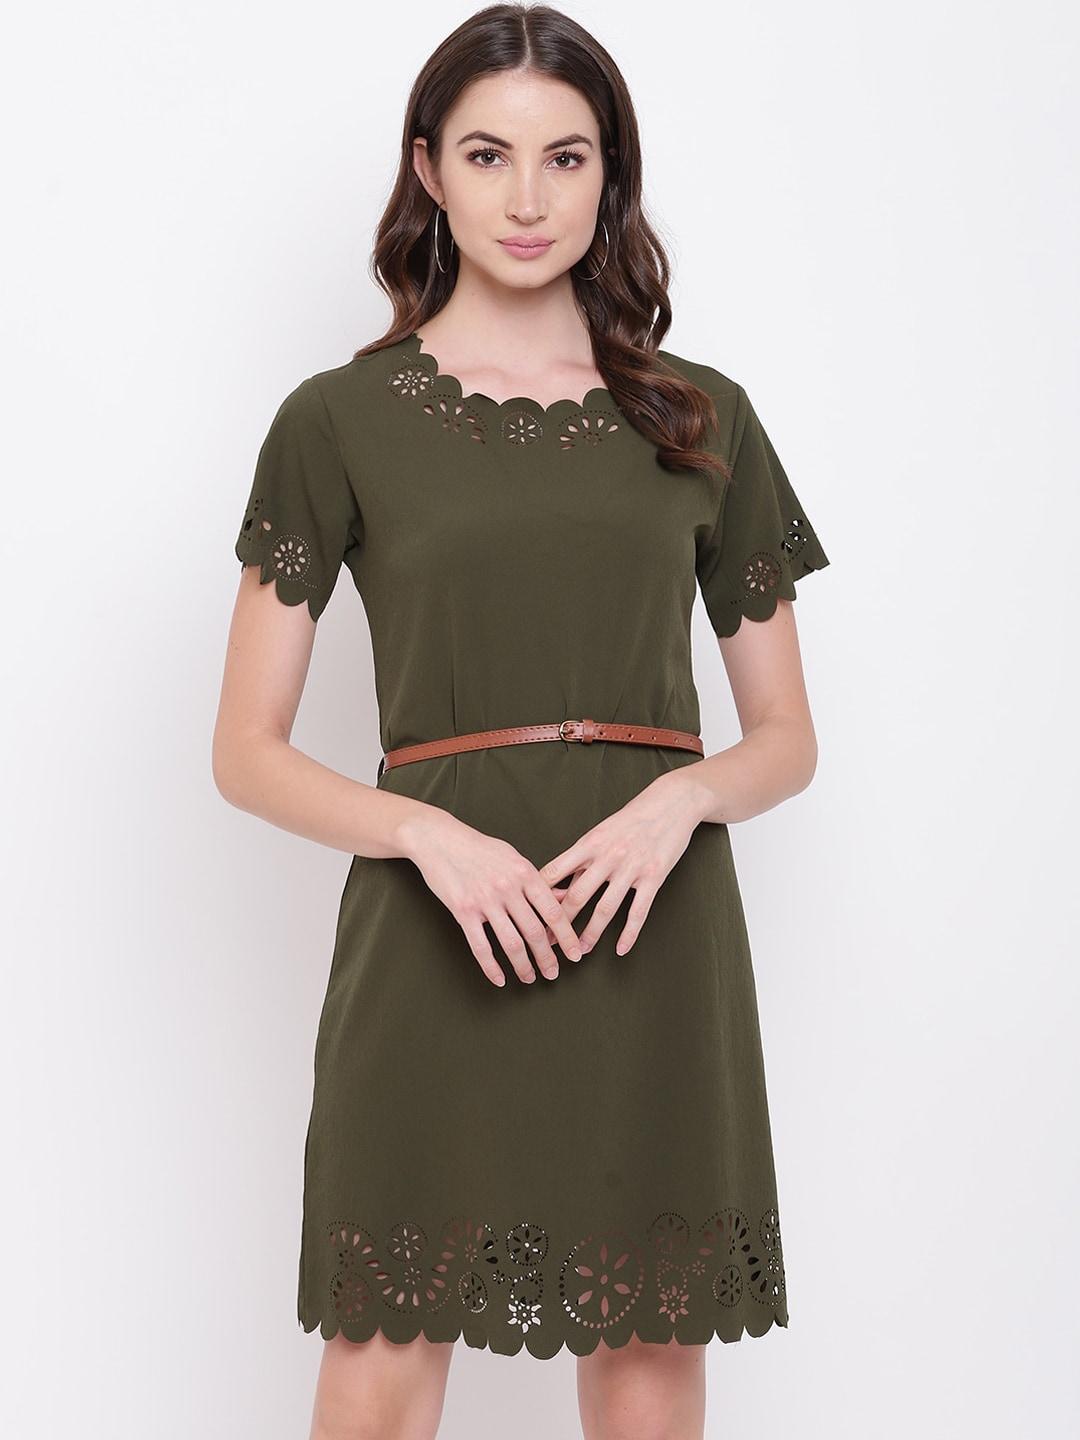 mayra women olive green solid sheath dress